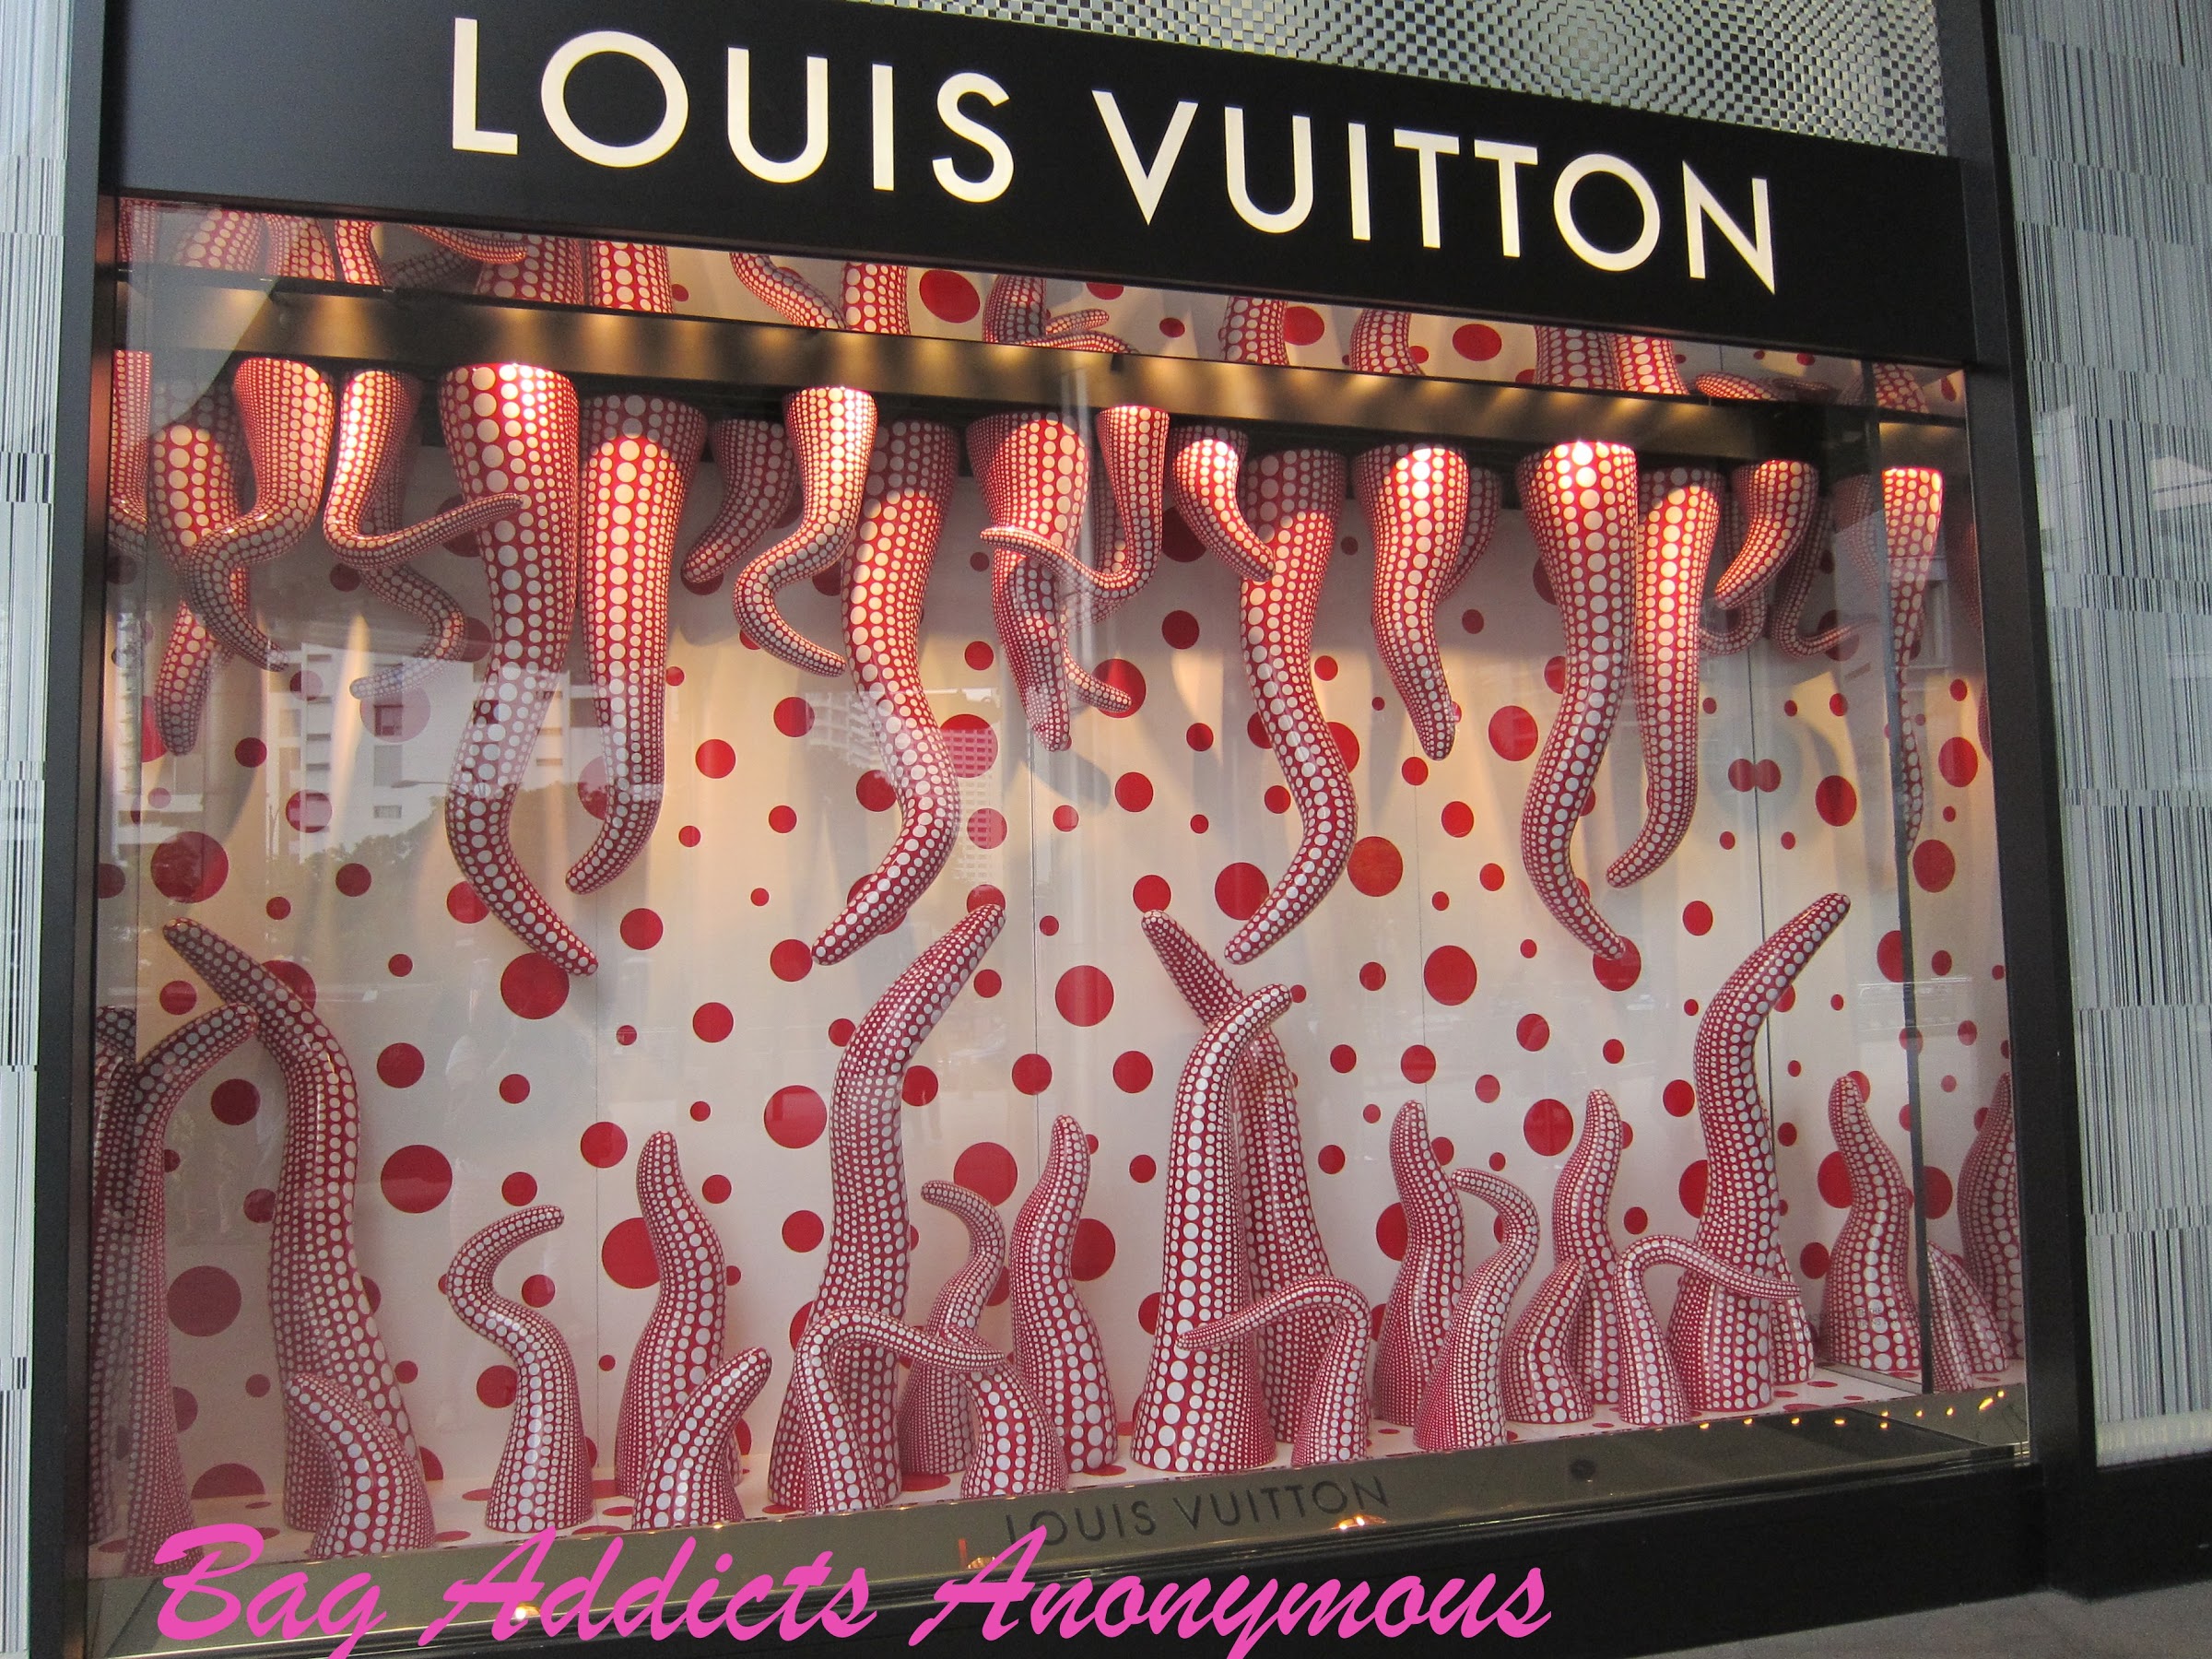 Yayoi Kusama for Louis Vuitton - The Bags! - BagAddicts Anonymous